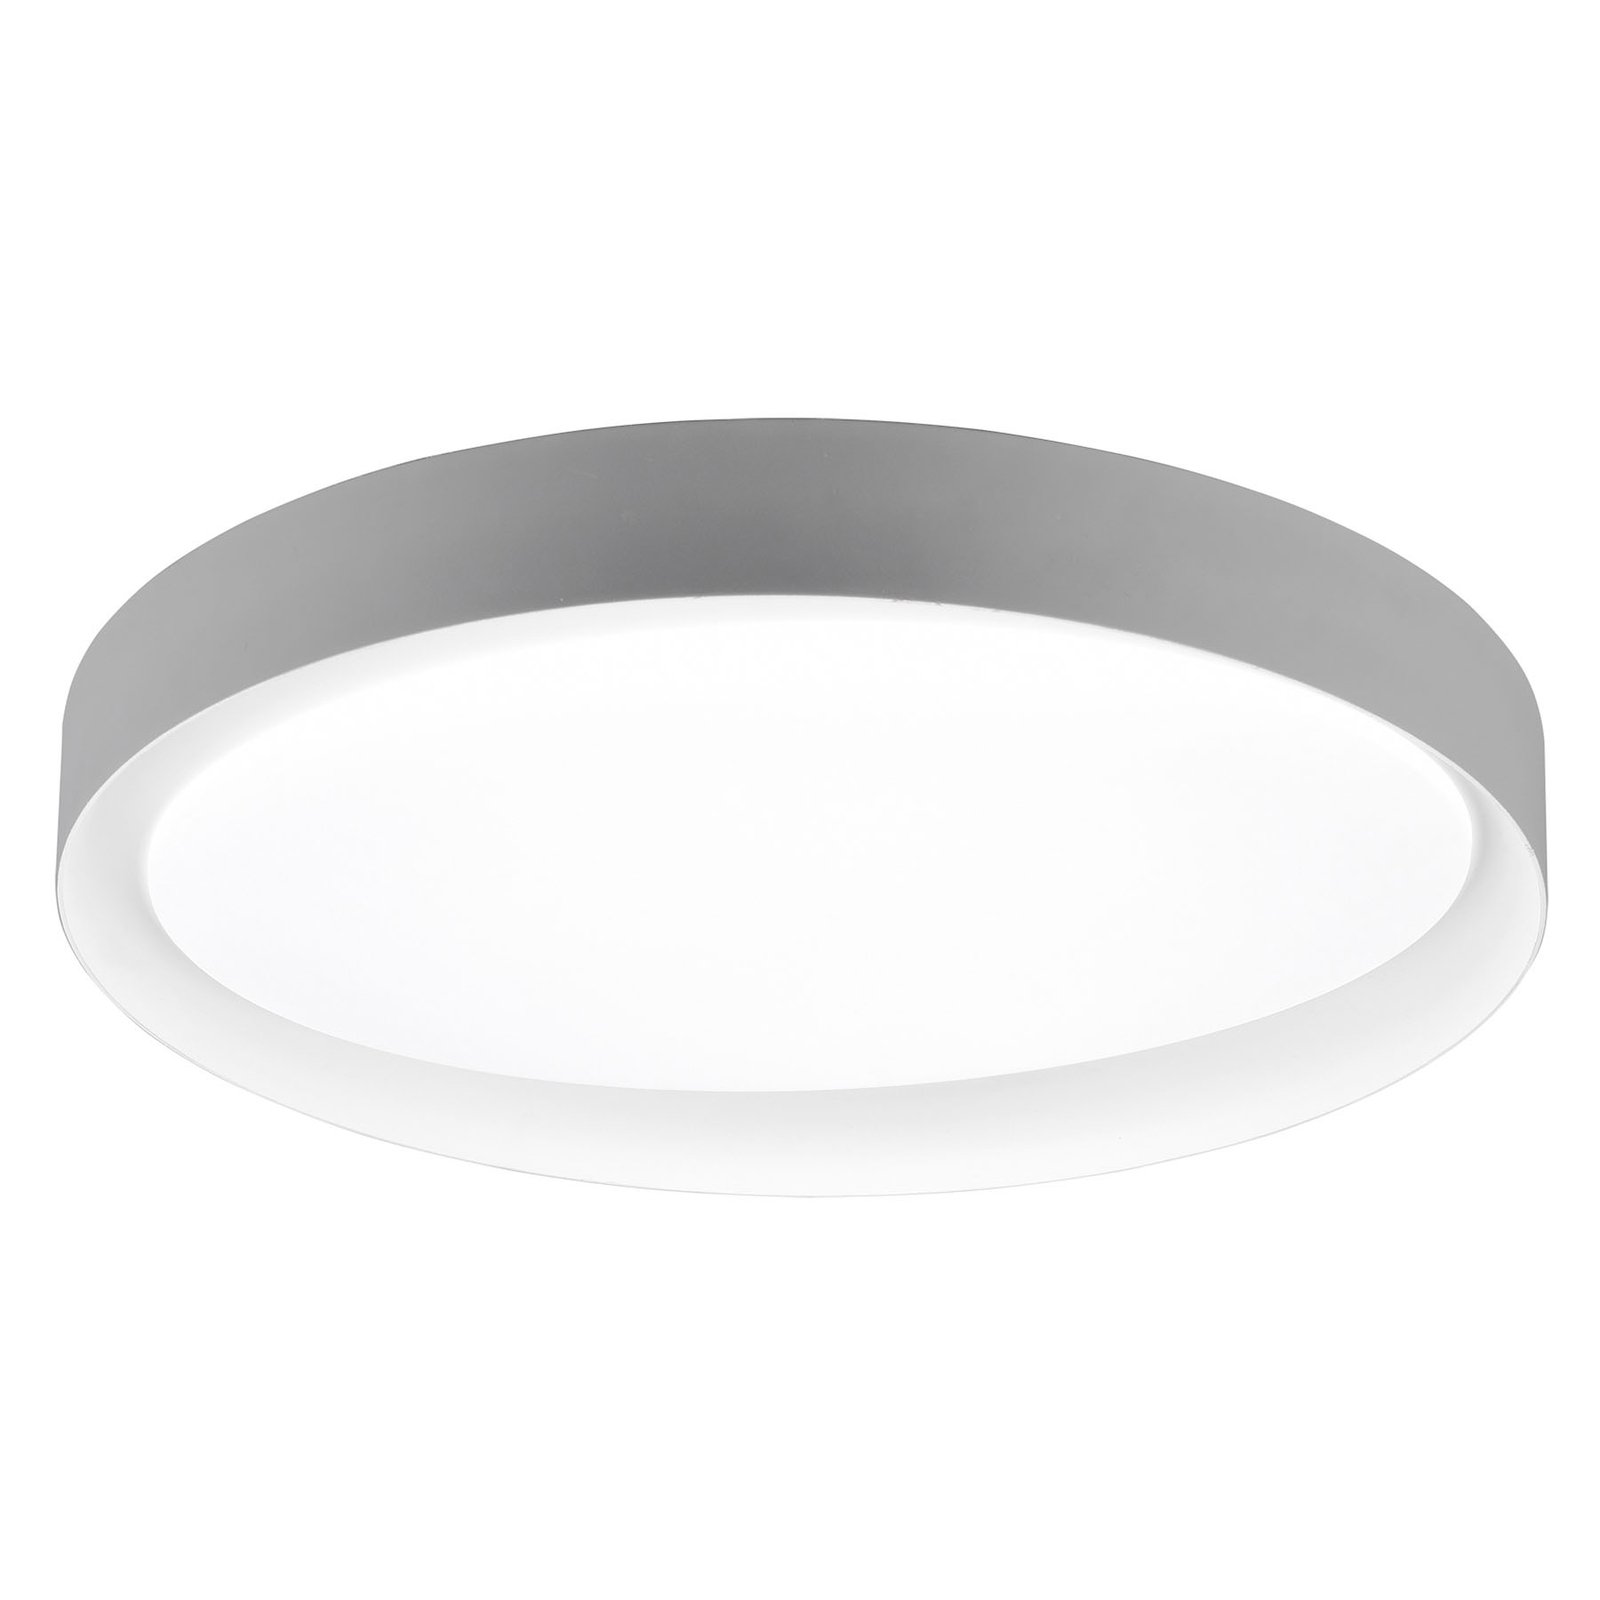 Zeta tunable white LED ceiling light, grey/white